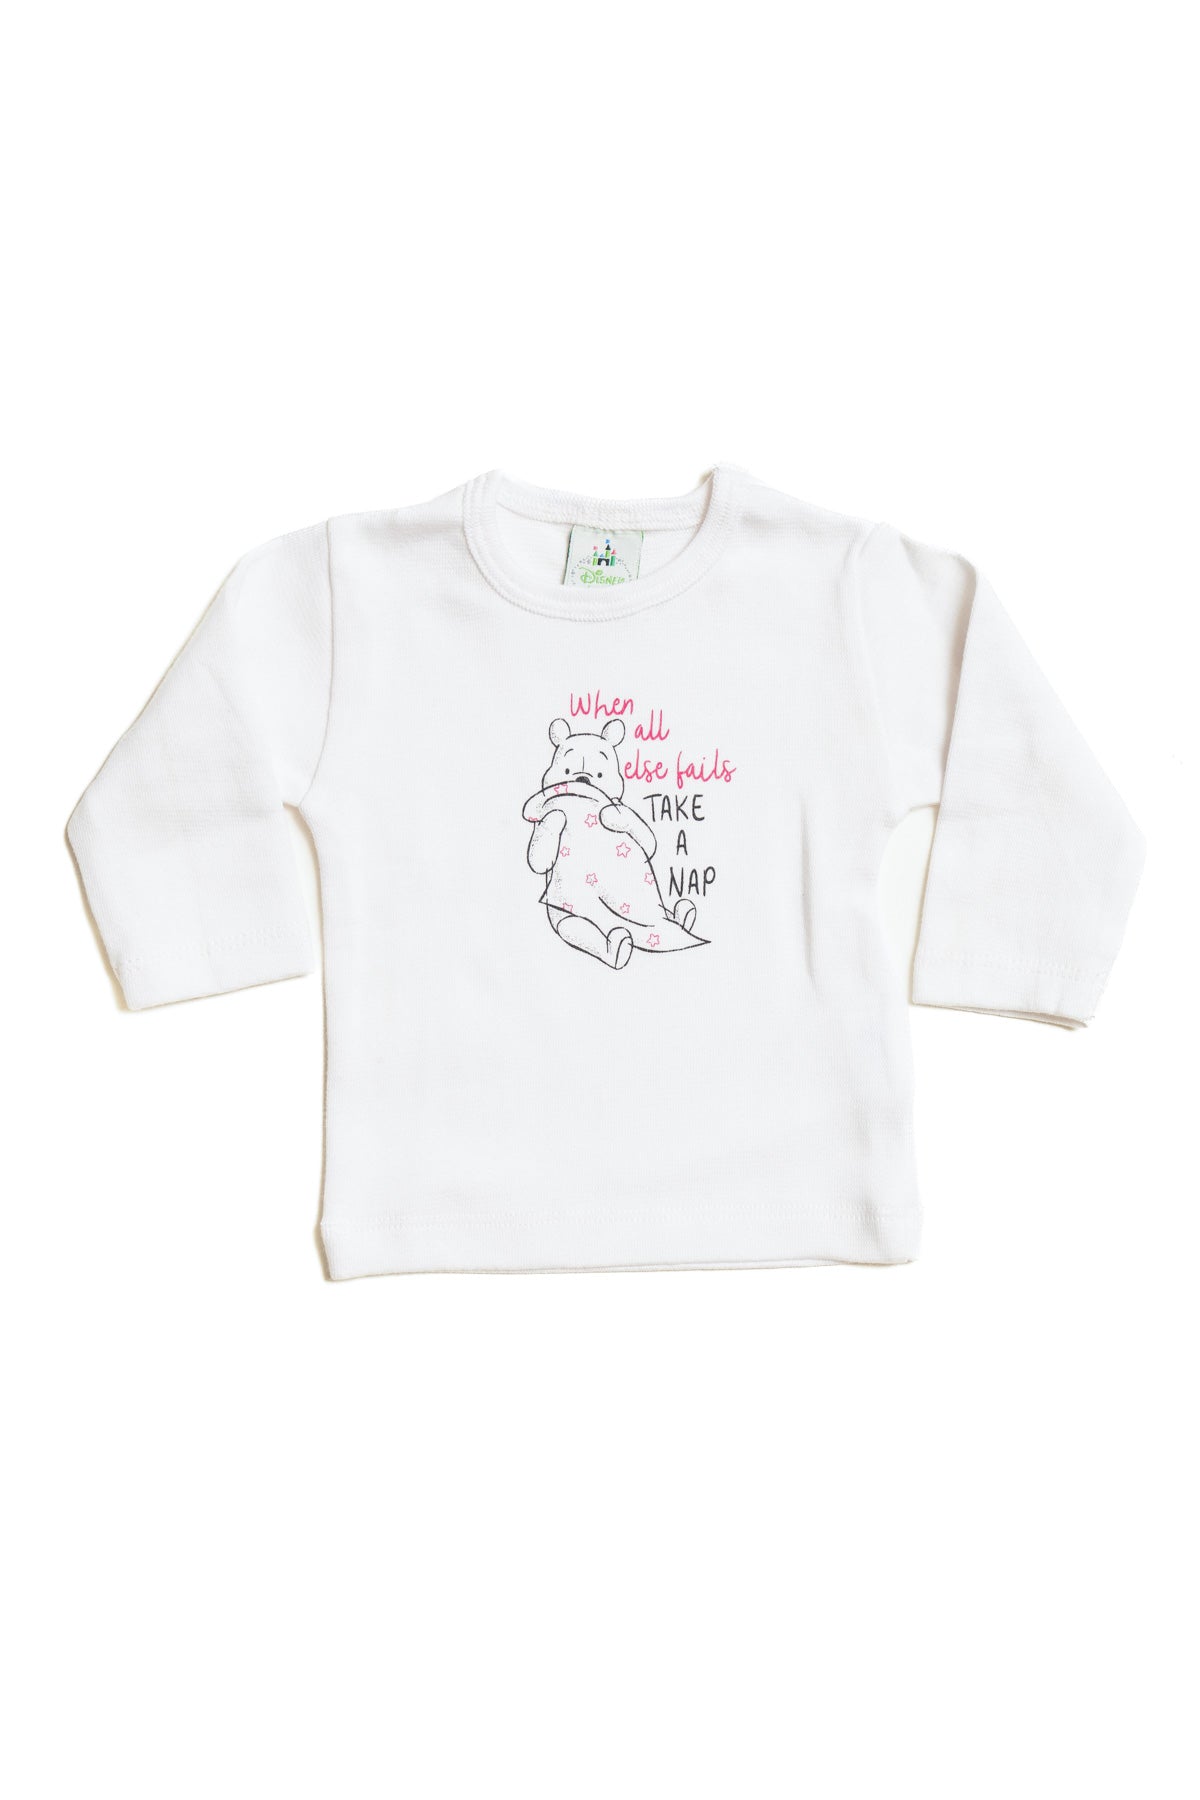 T-Shirt Baby Pooh sleeve 4031